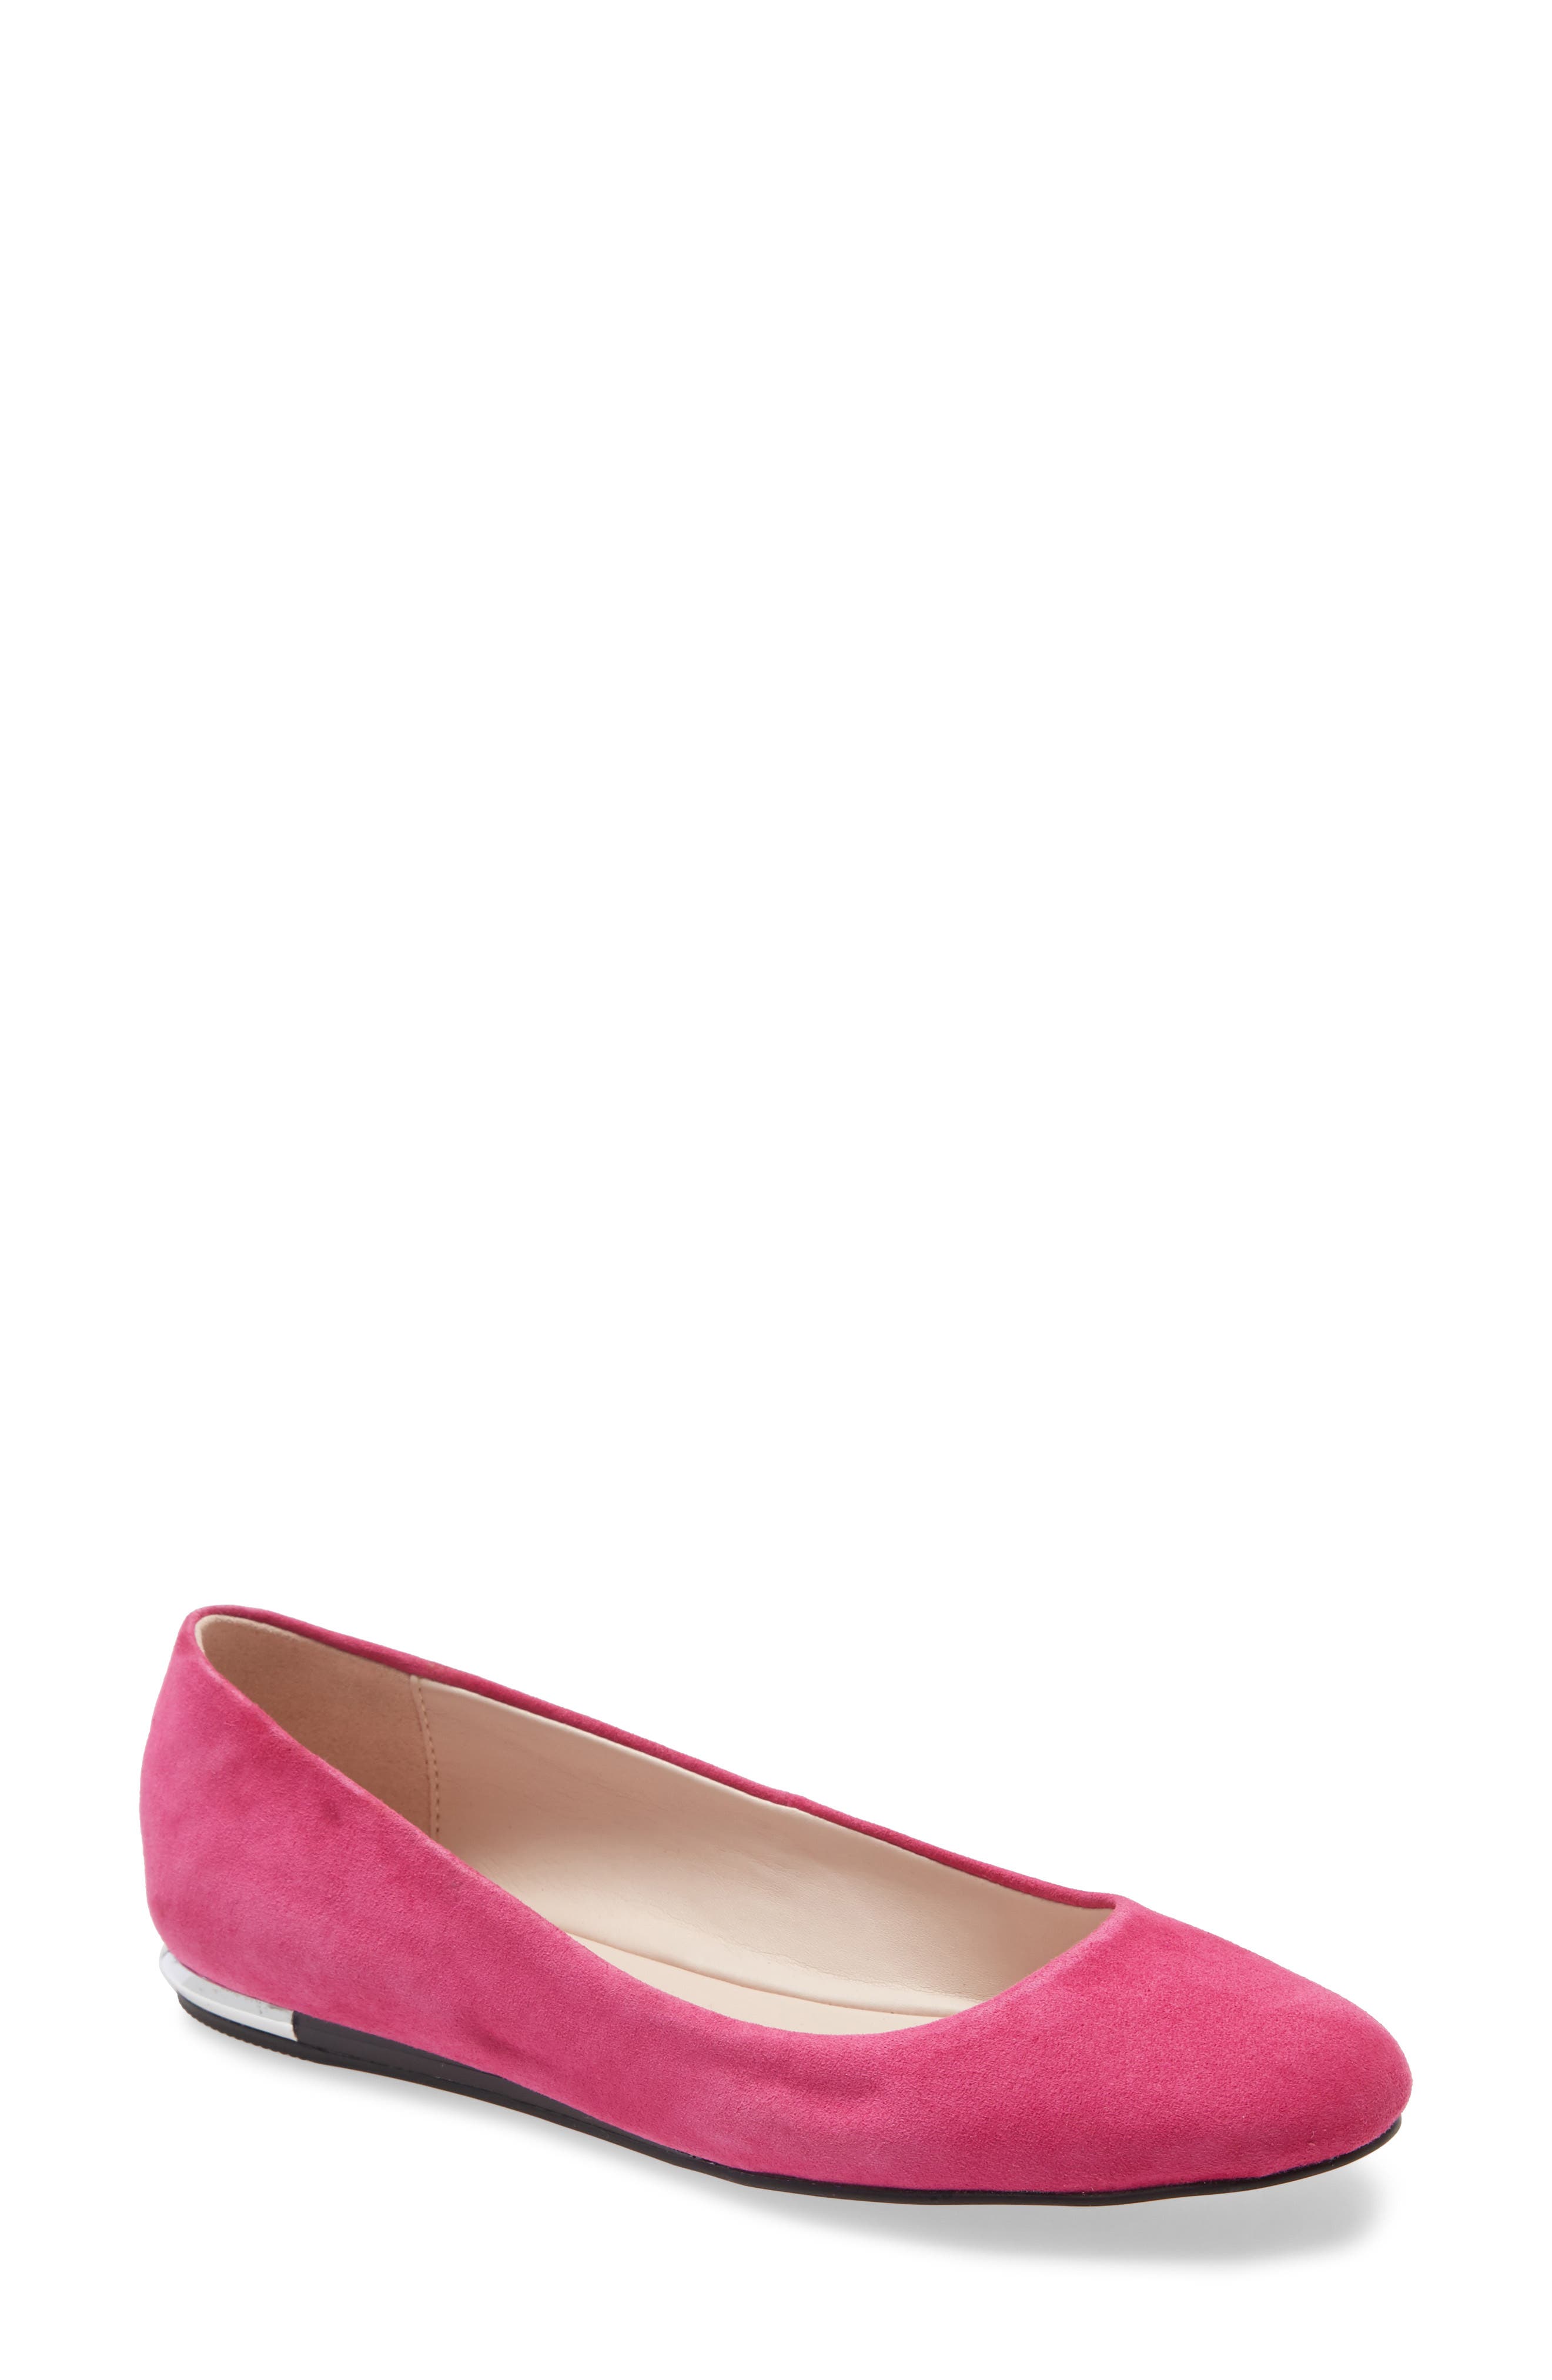 UPC 194060233765 product image for Women's Calvin Klein Kosi Skimmer Flat, Size 7.5 M - Pink | upcitemdb.com